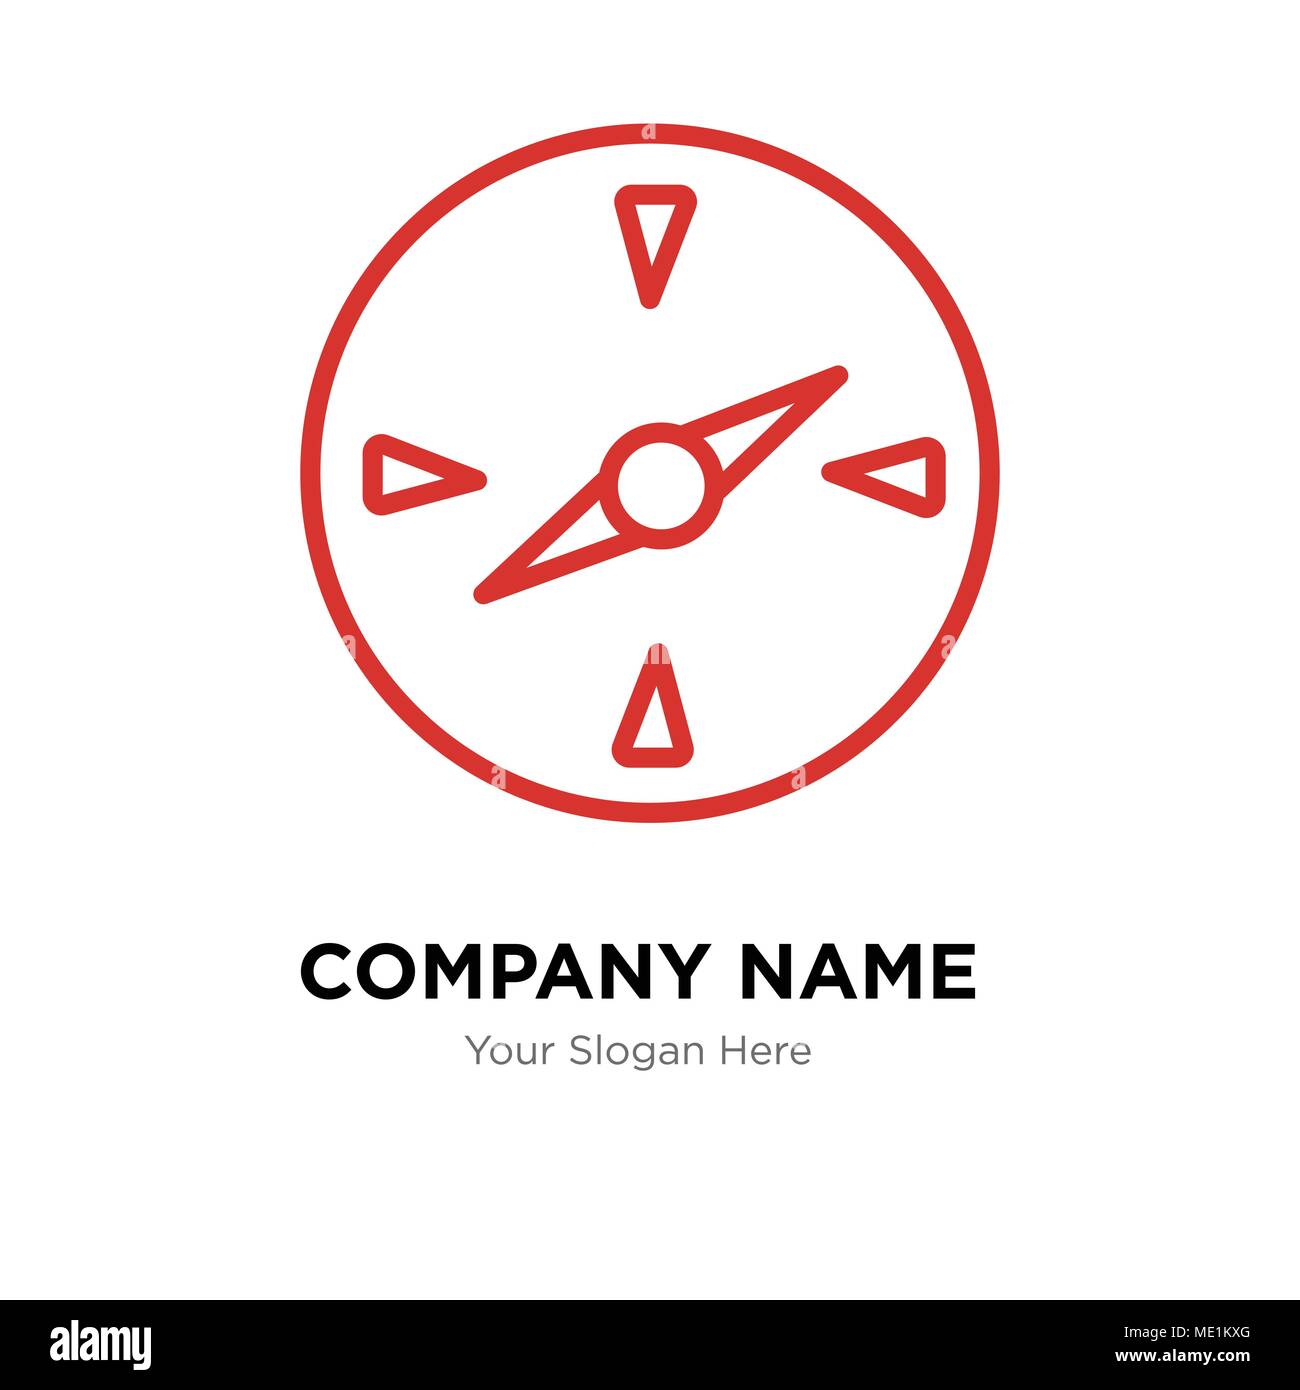 Compass company logo design template, Business corporate vector icon Stock Vector